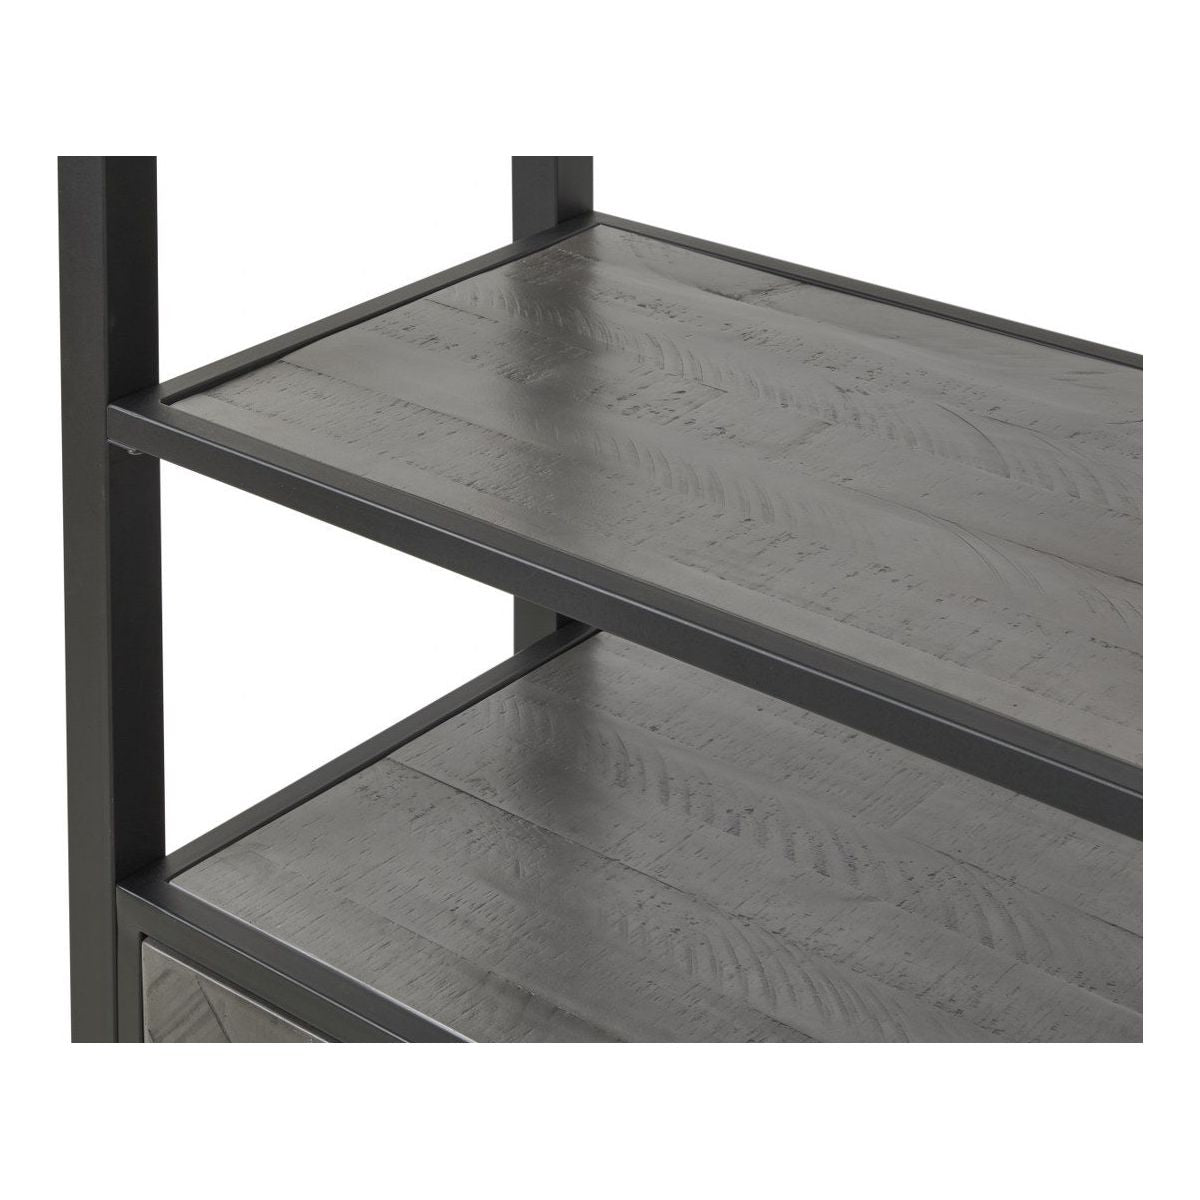 Wall cabinet | Furniture series Micras | Dark gray, black | 75x42